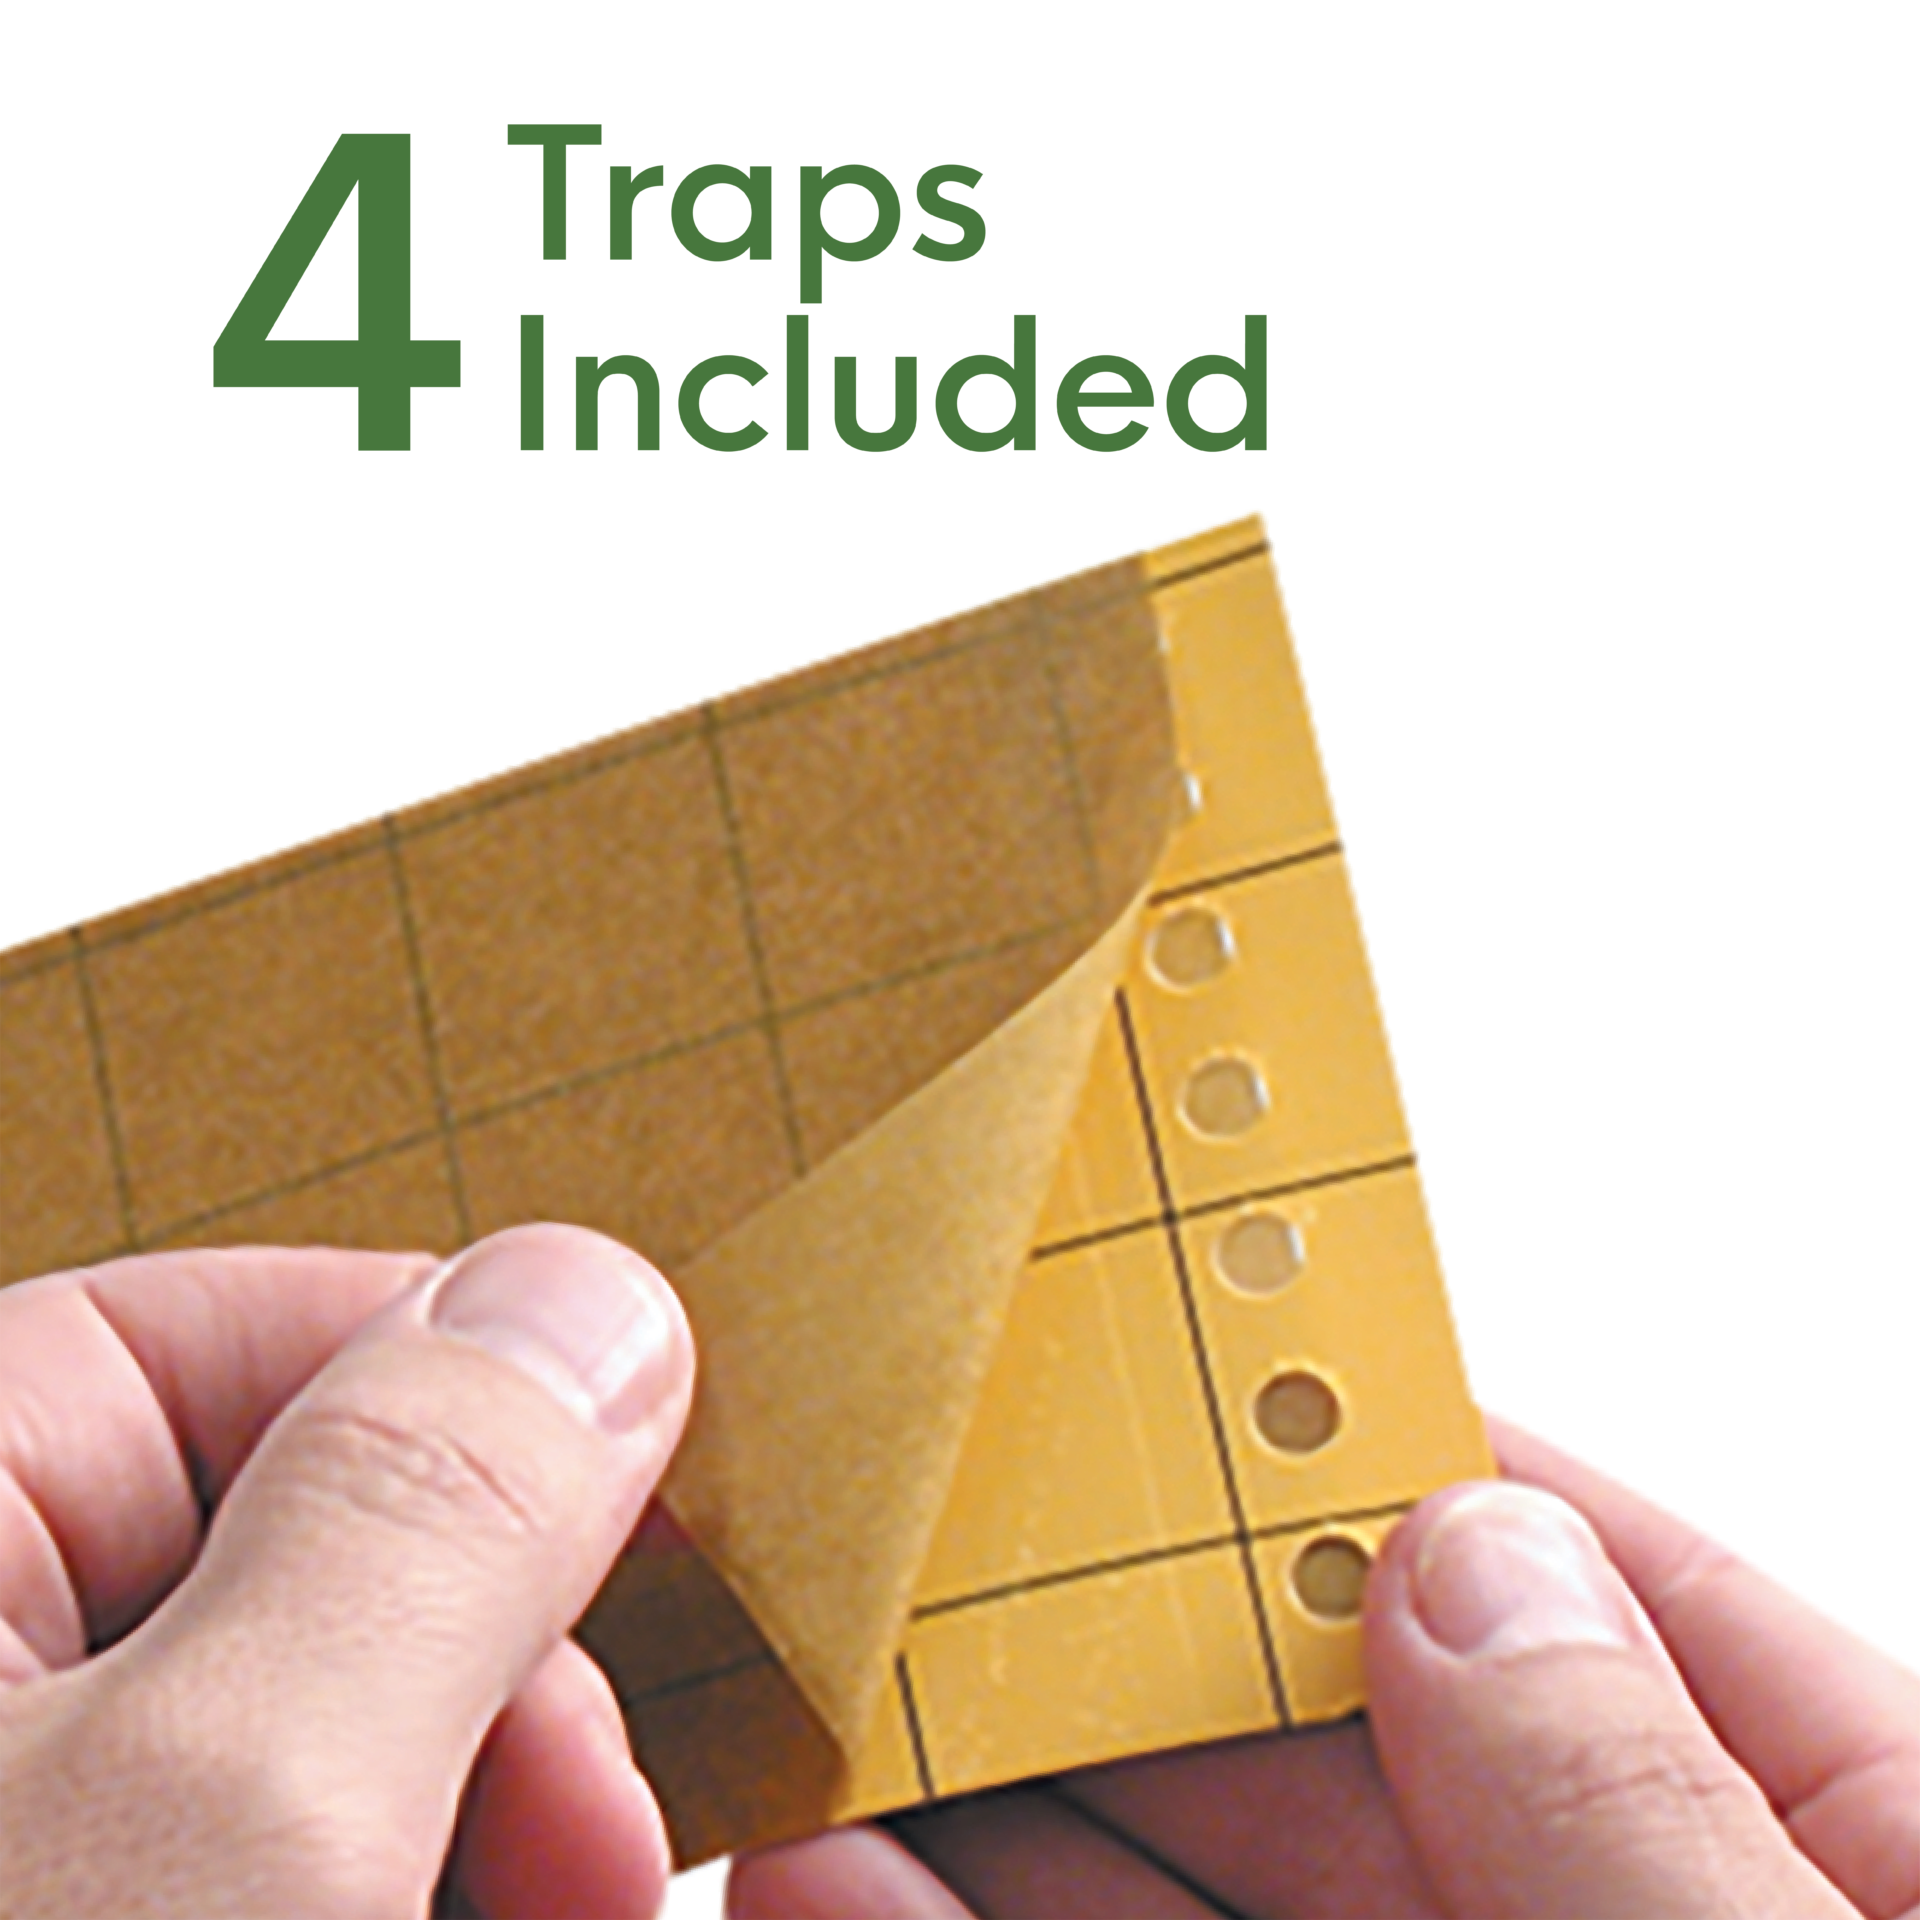 BioCare® Window Fly Trap - 1 pk of 4 traps